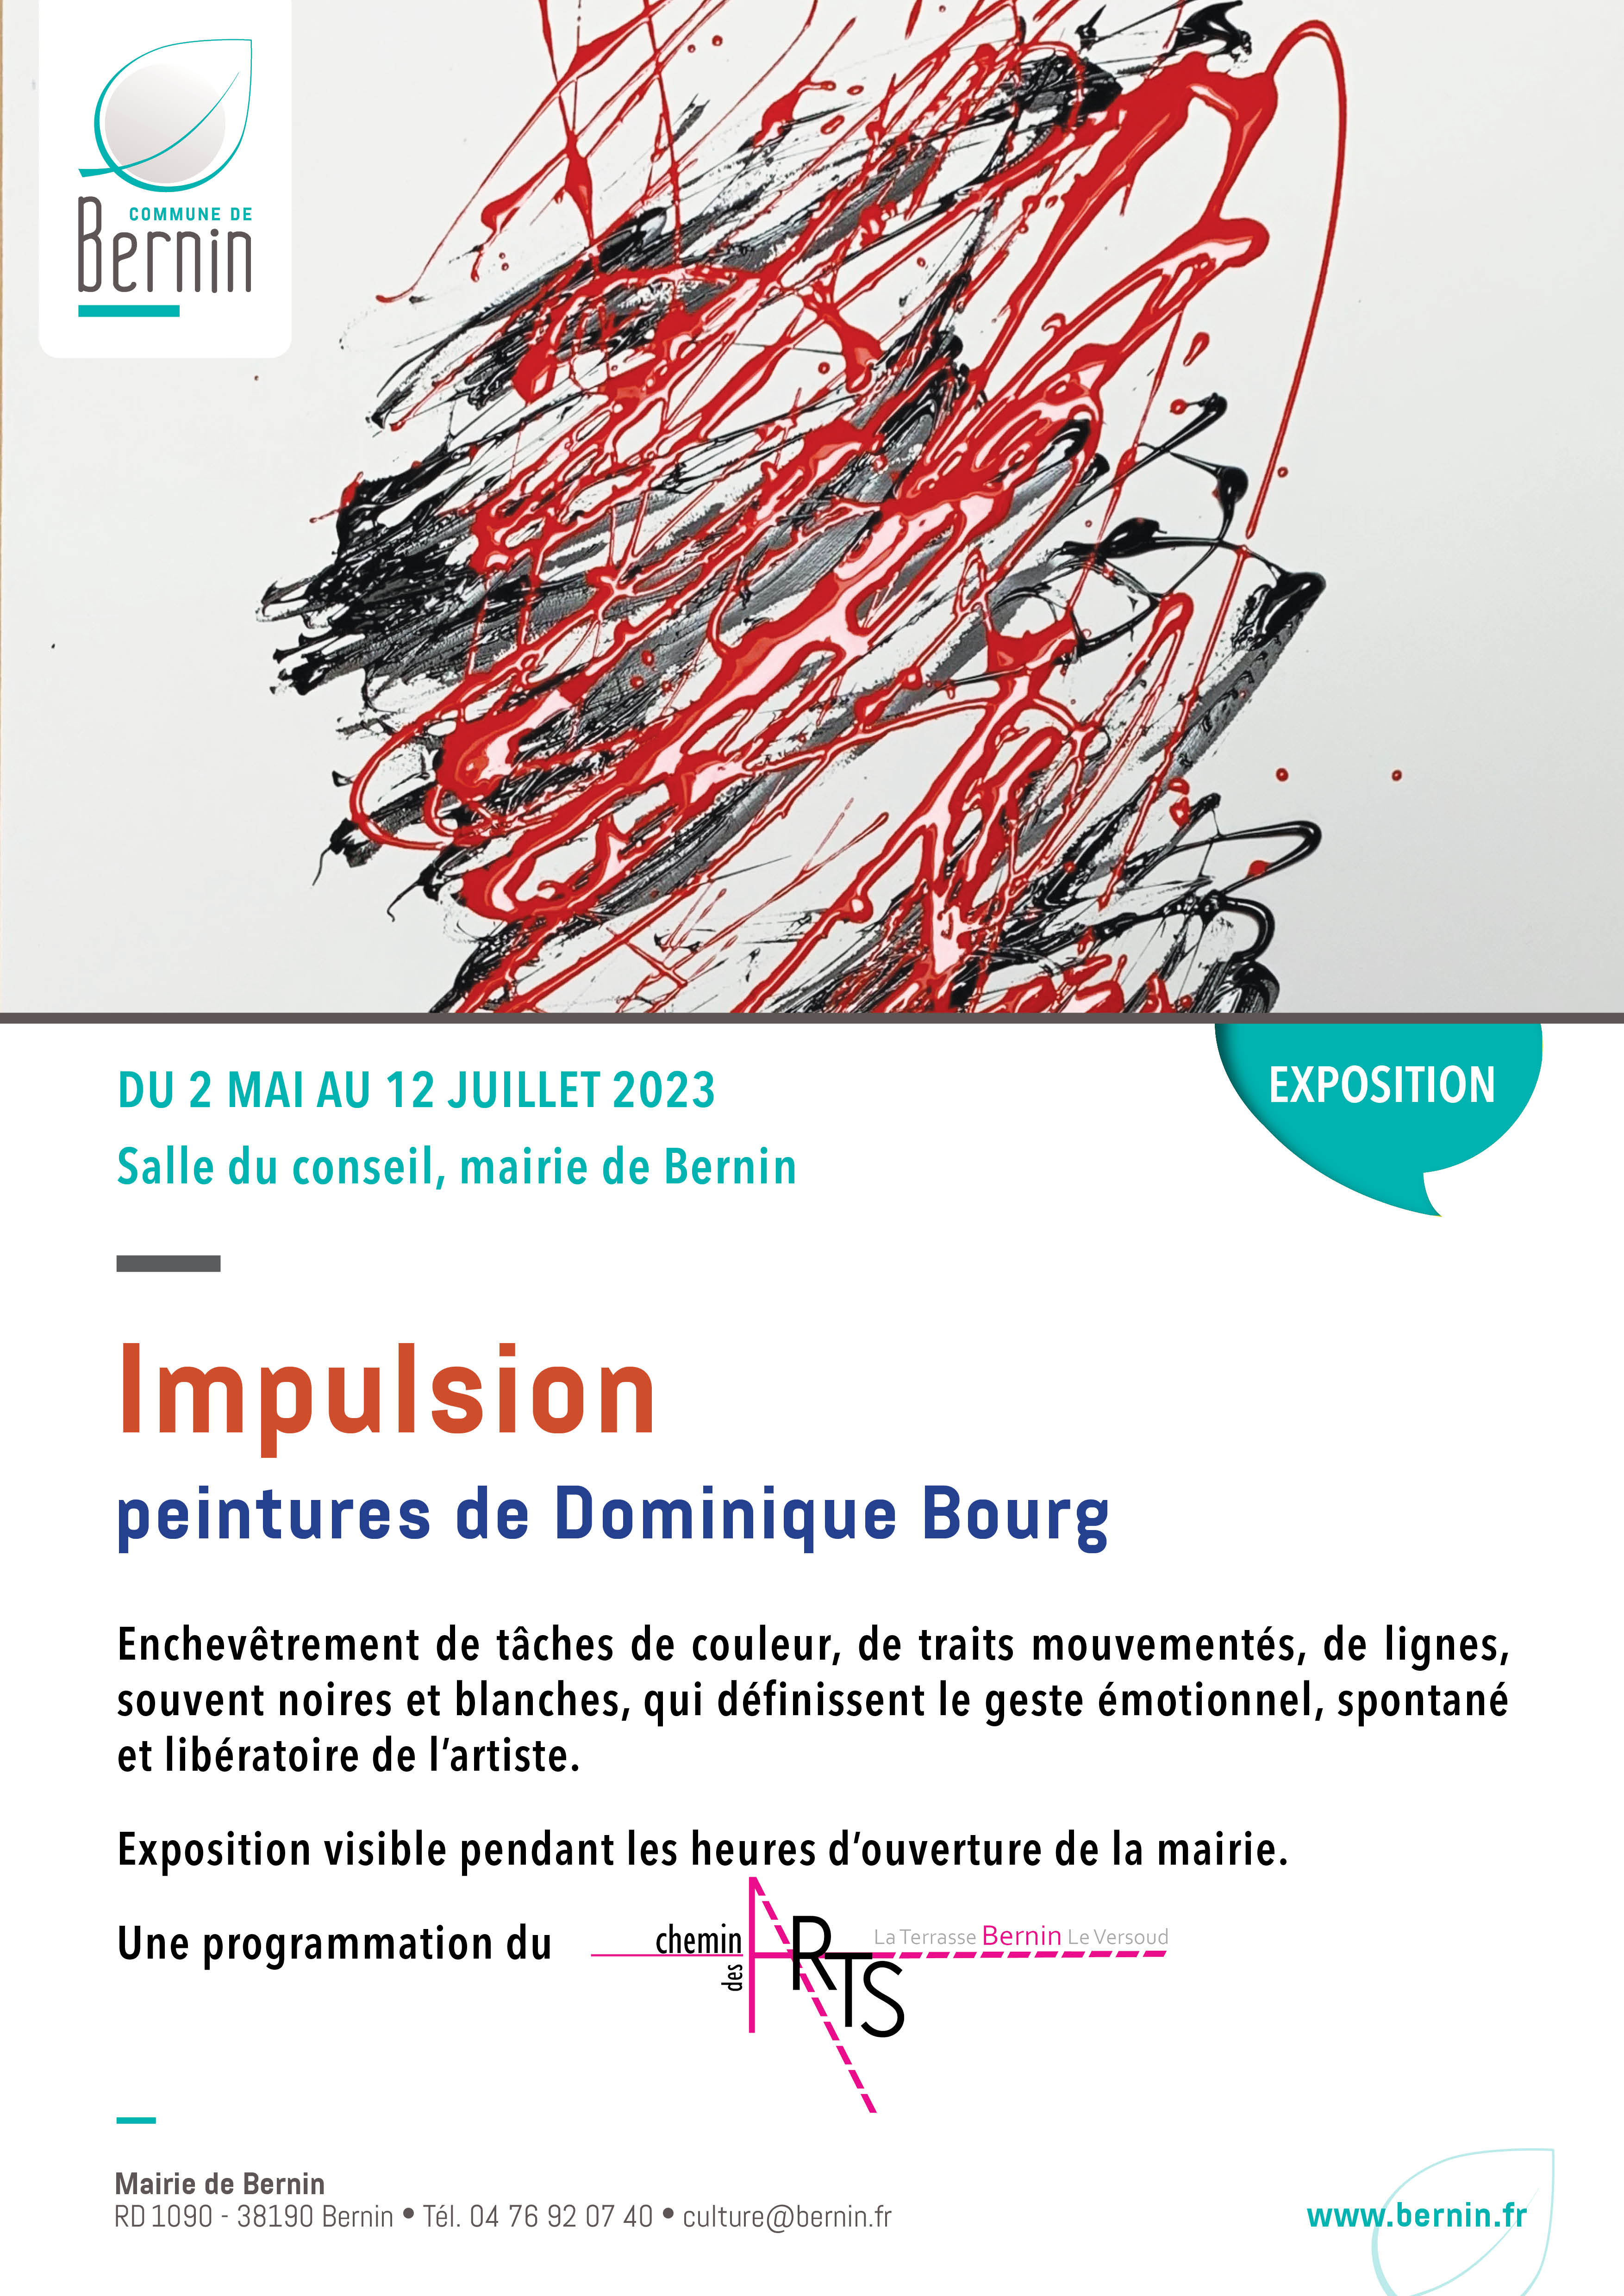 Exposition "Impulsion" peintures de Dominique Bourg